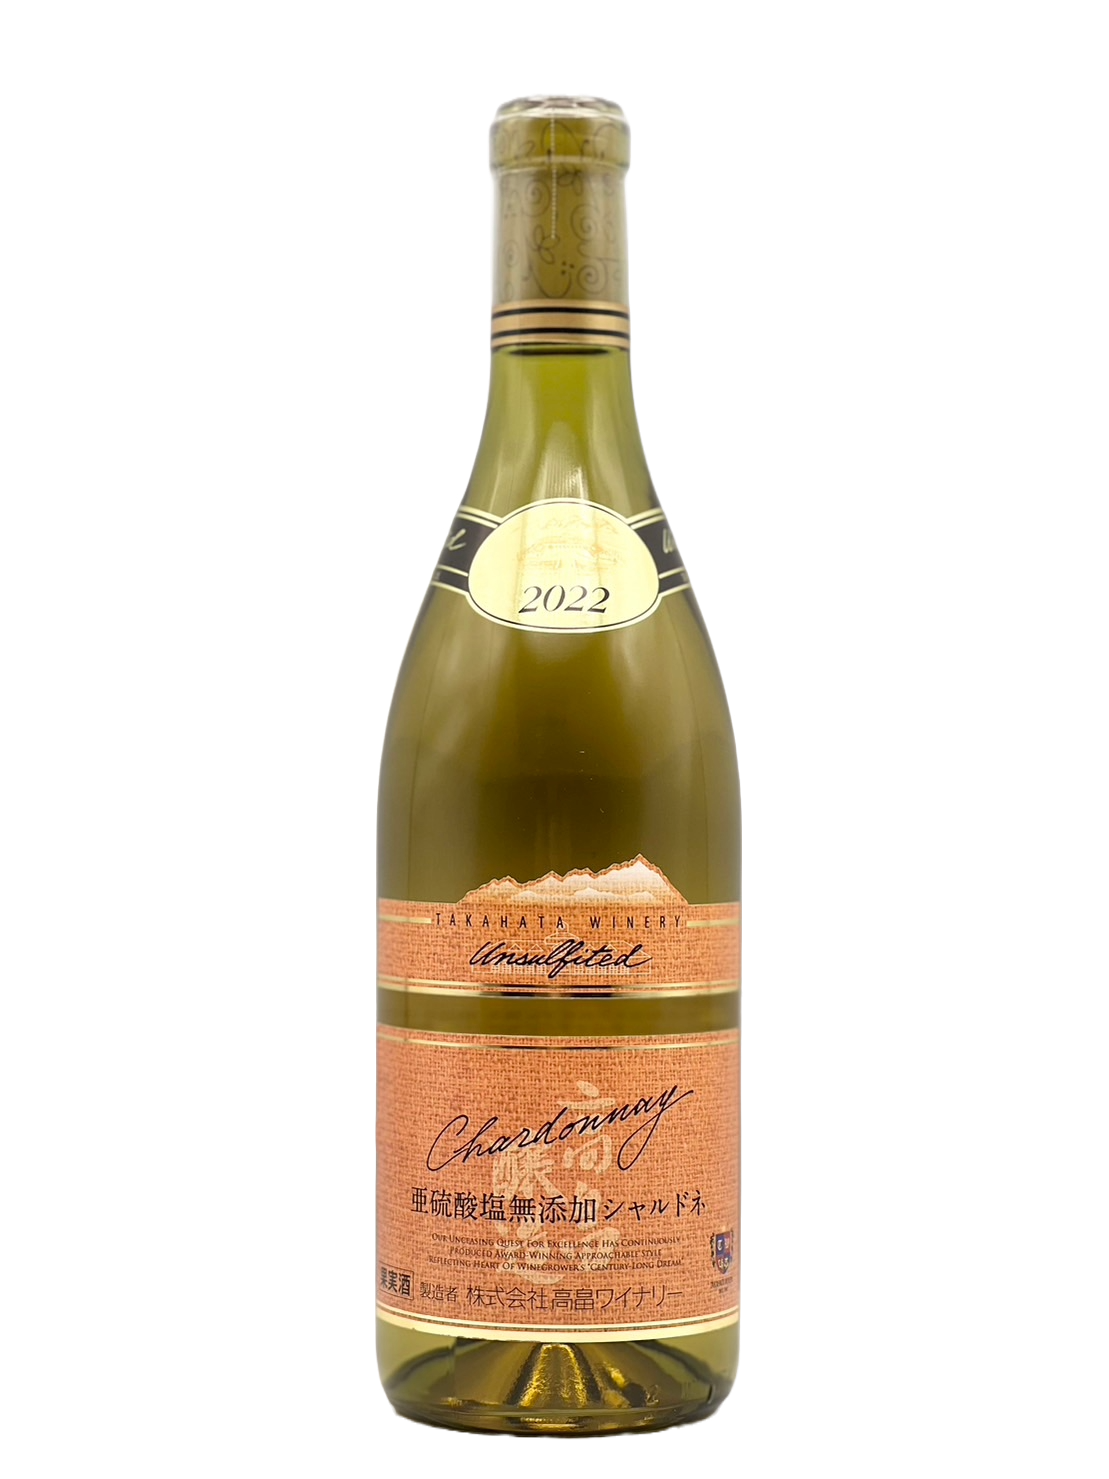 2022 Takahata Sulfite-free Chardonnay